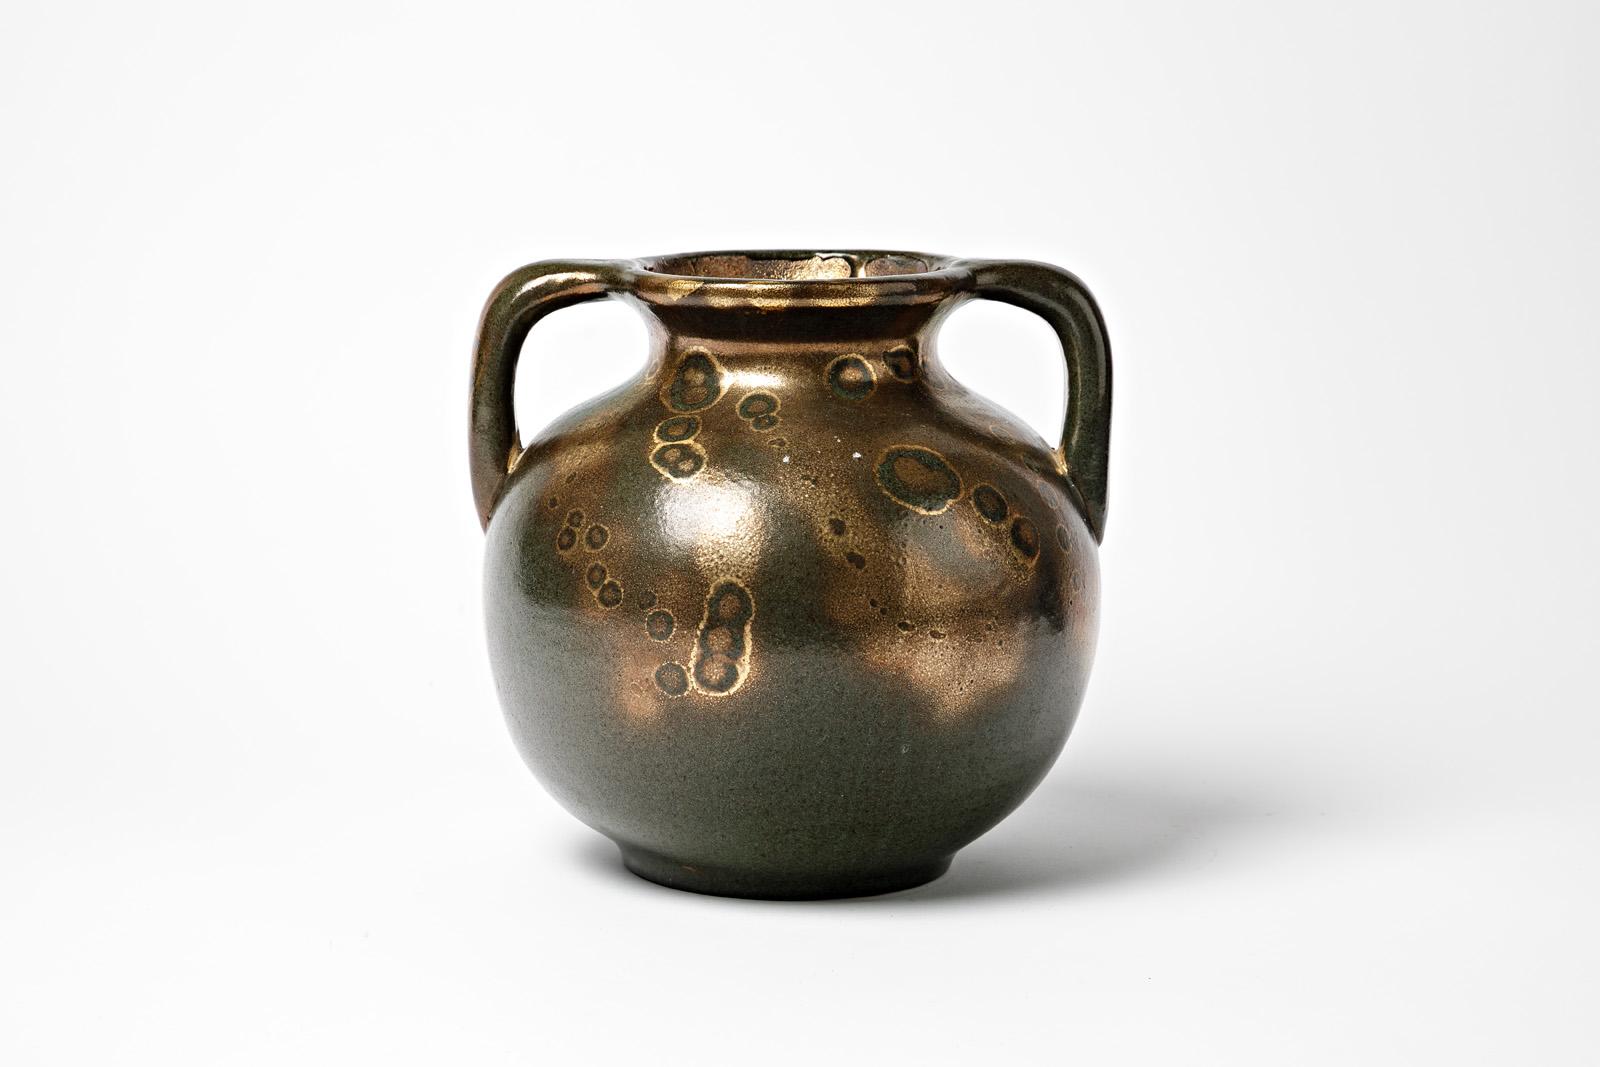 Attributed to Lucien Brisdoux

Large art deco 1930 ceramic vase

Green and gold ceramic glazes colors

Original perfect condition

height 21 cm
Large 21 cm.
 